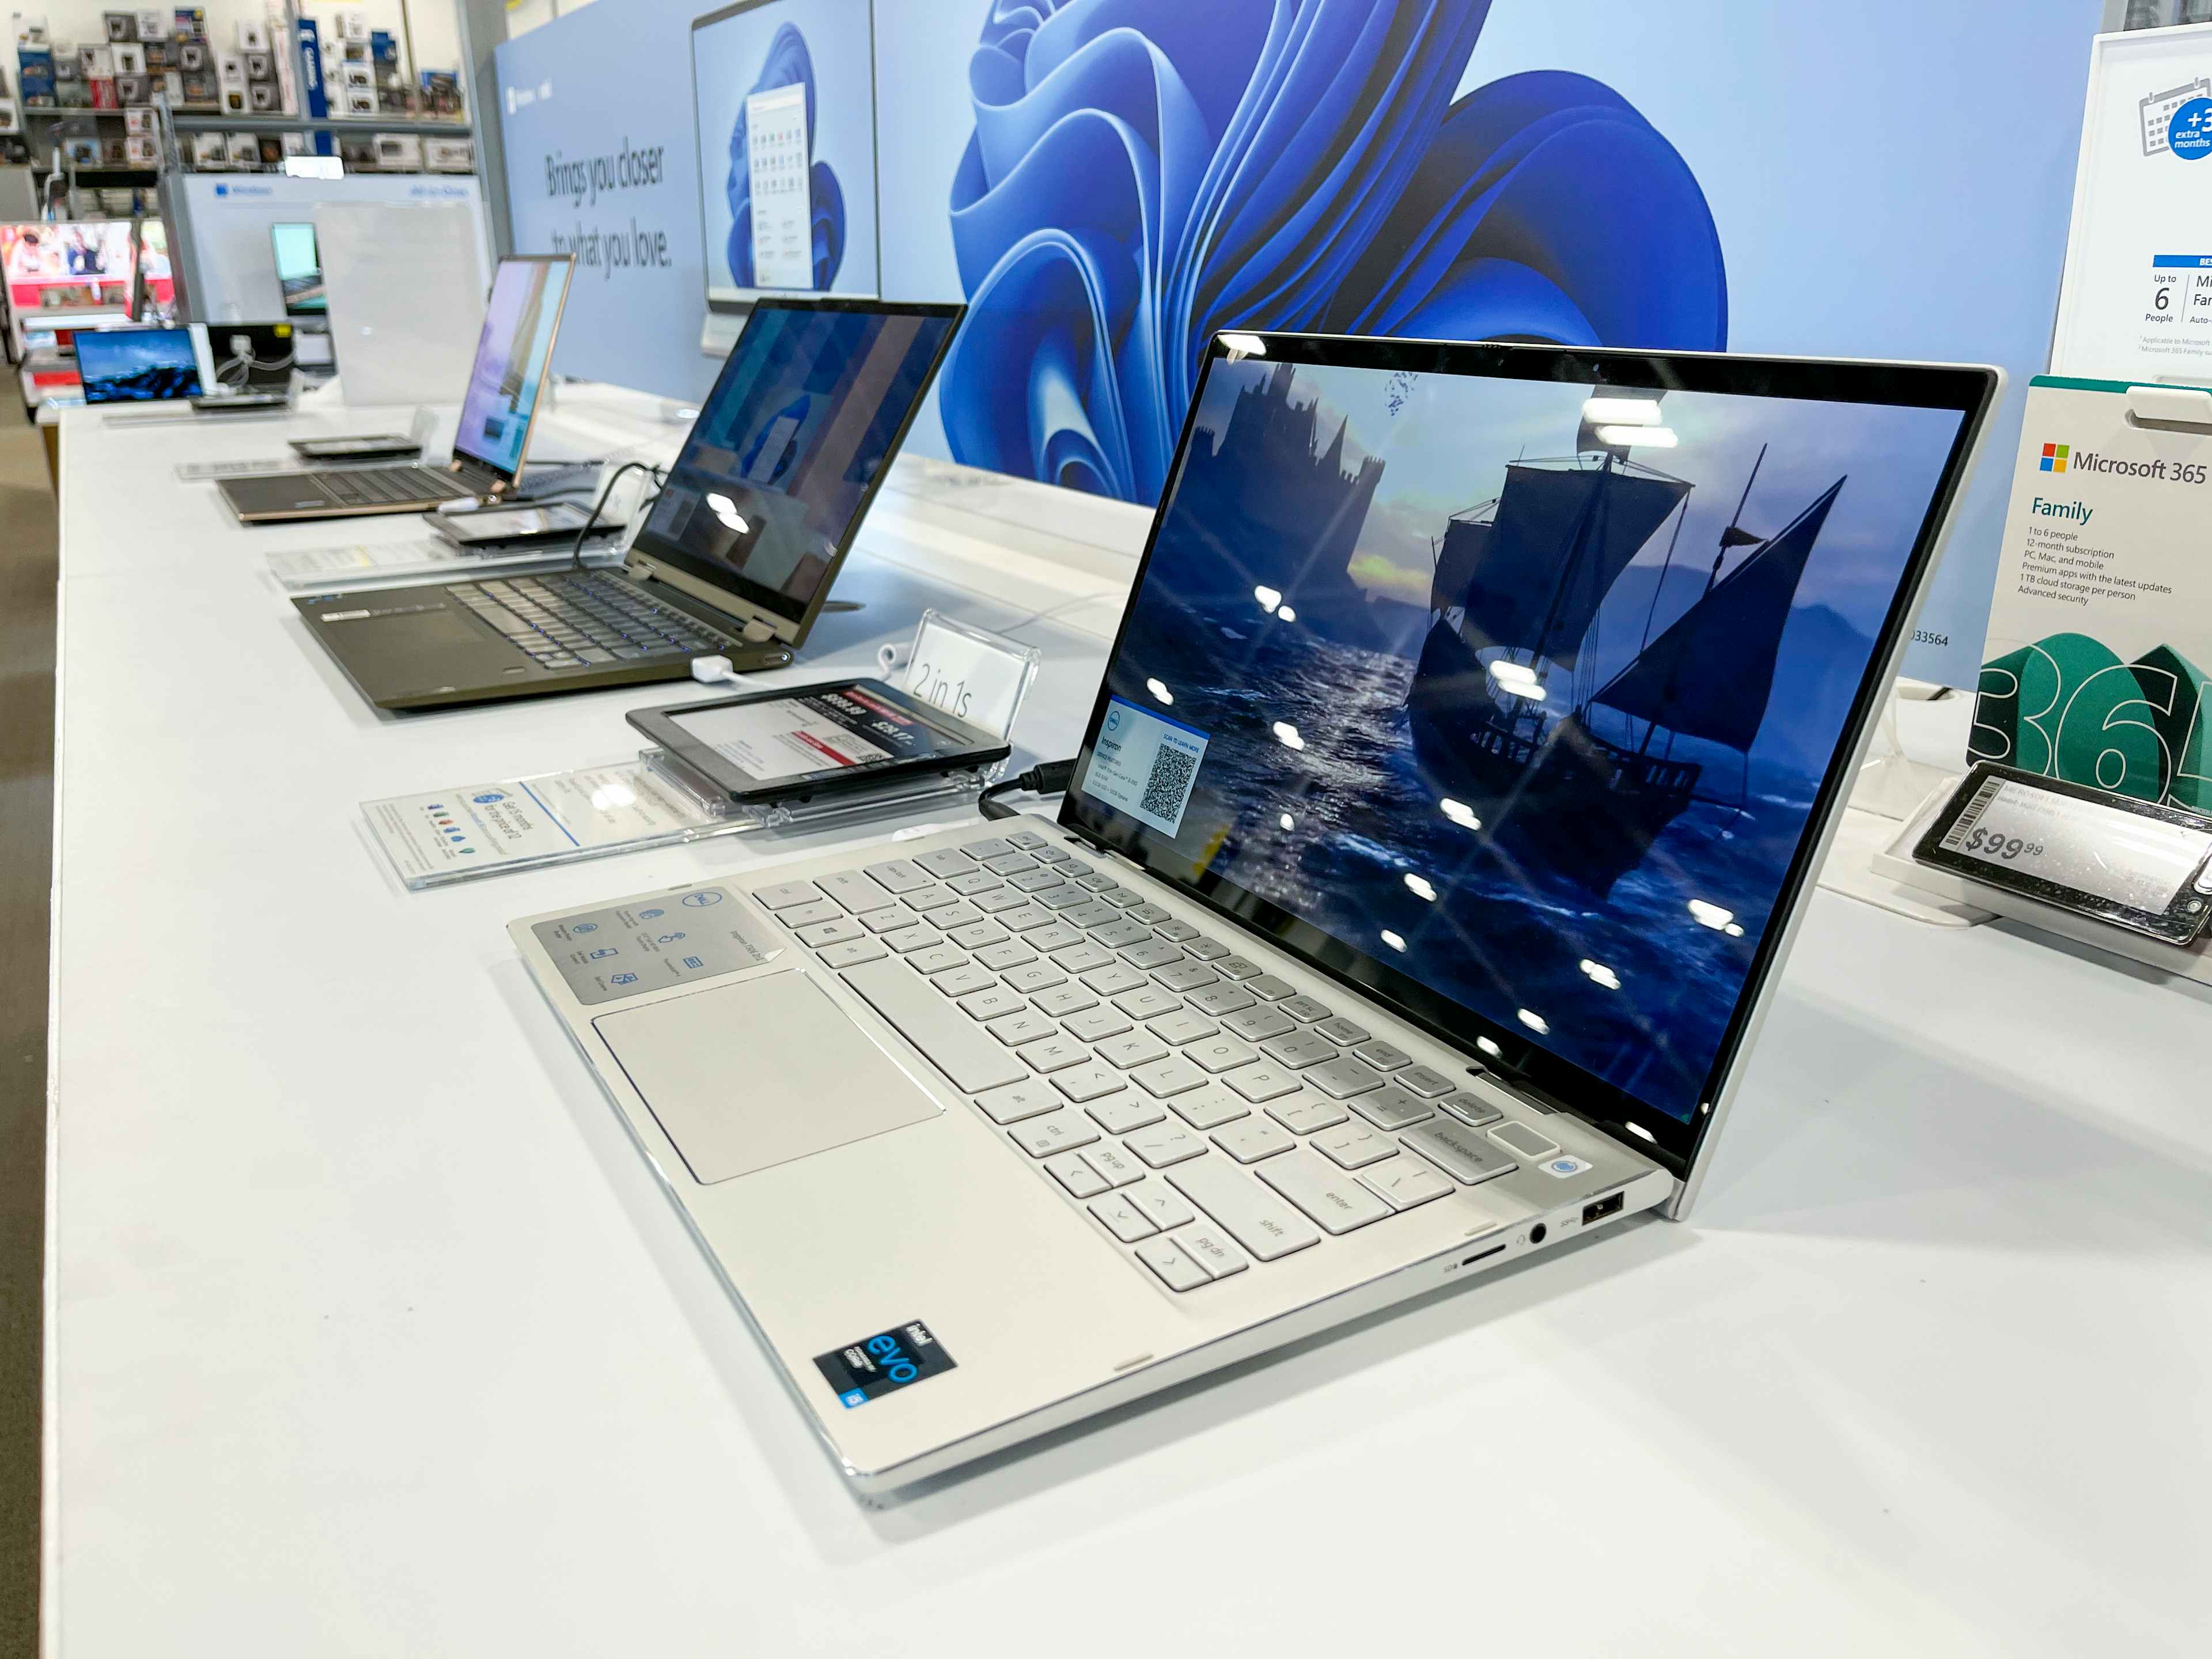 Windows Laptop computers at Best Buy